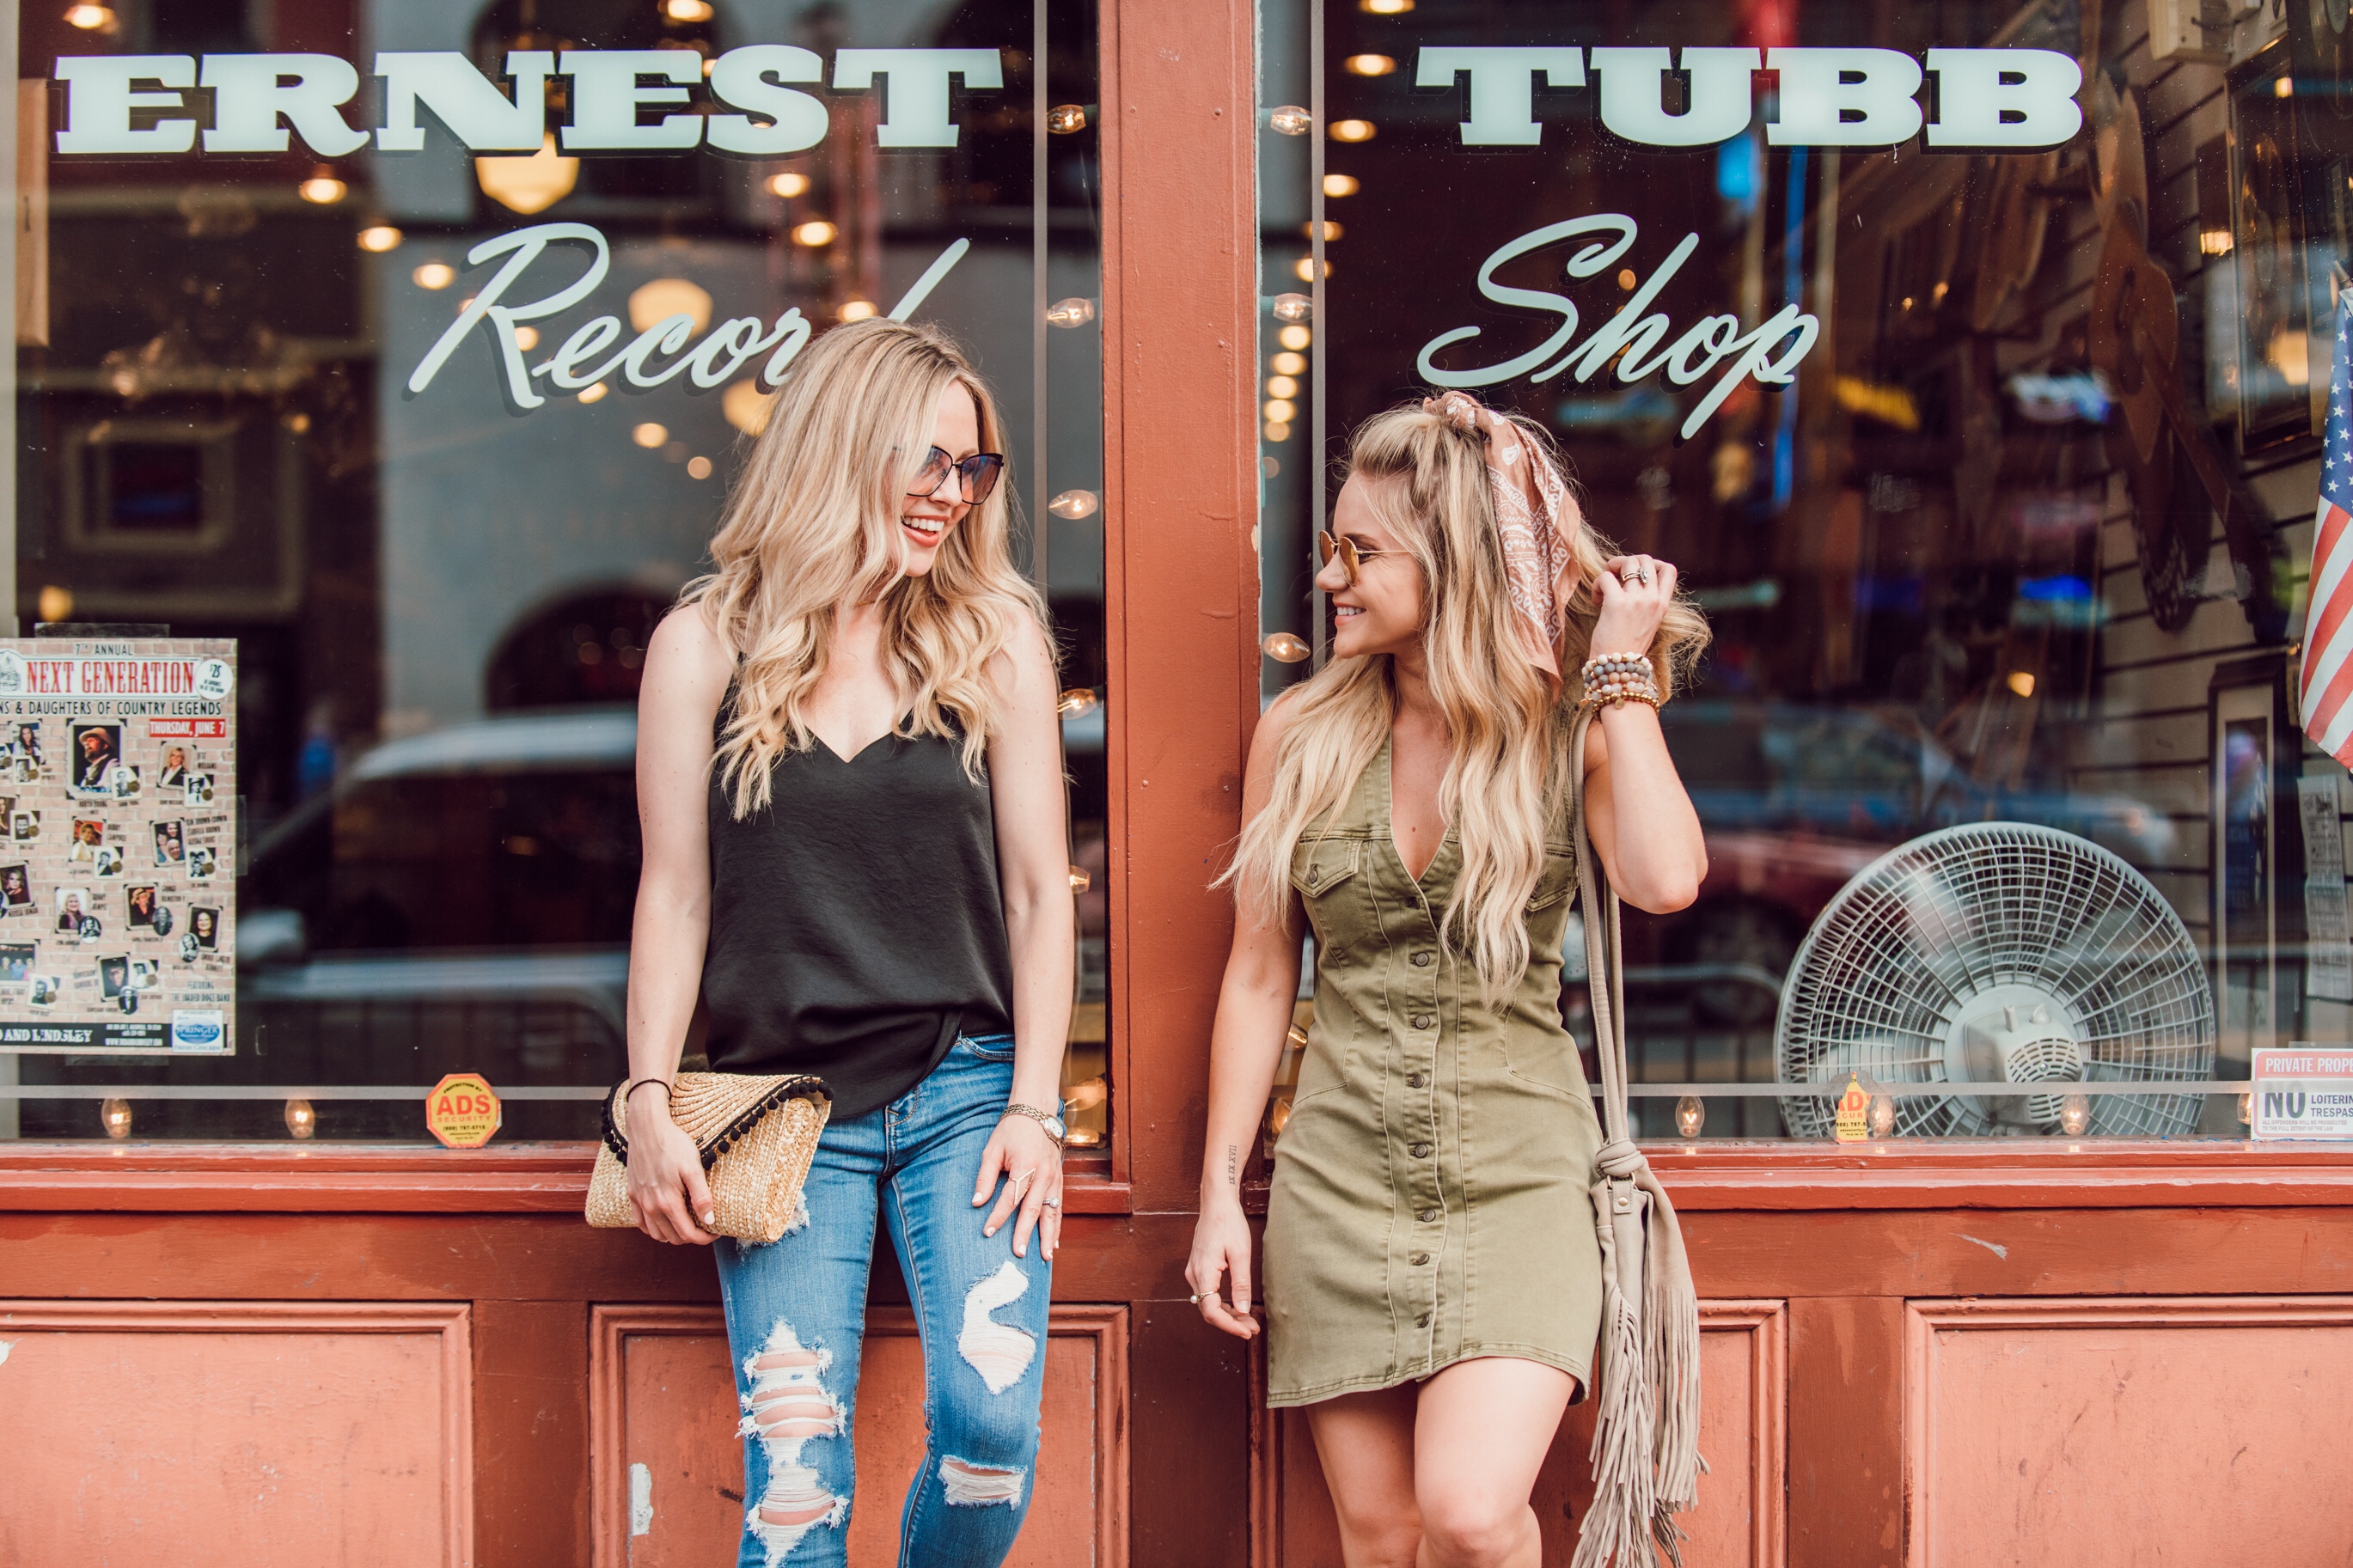 nashville to do guide - GUIDE TO NASHVILLE: BROADWAY || LINK UP WITH HUNTER PREMO featured by popular Nashville blogger, Nashville Wifestyles